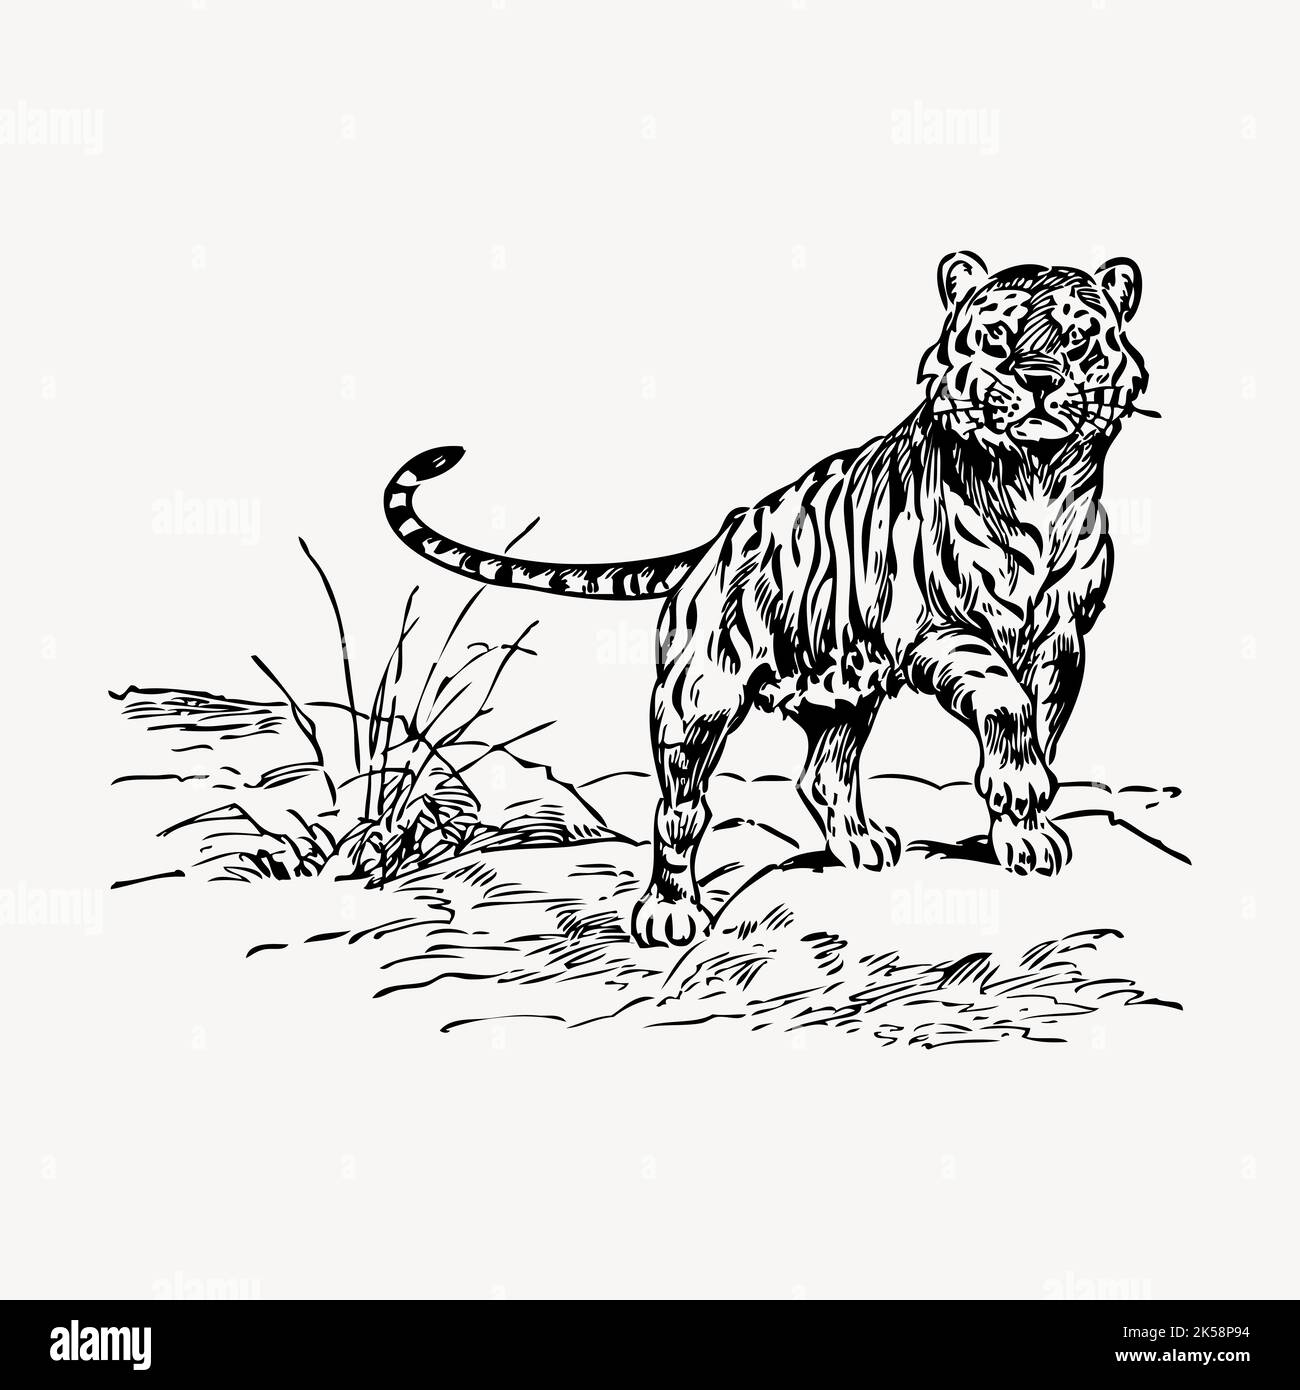 Tiger drawing, vintage wildlife illustration vector Stock Vector Image ...